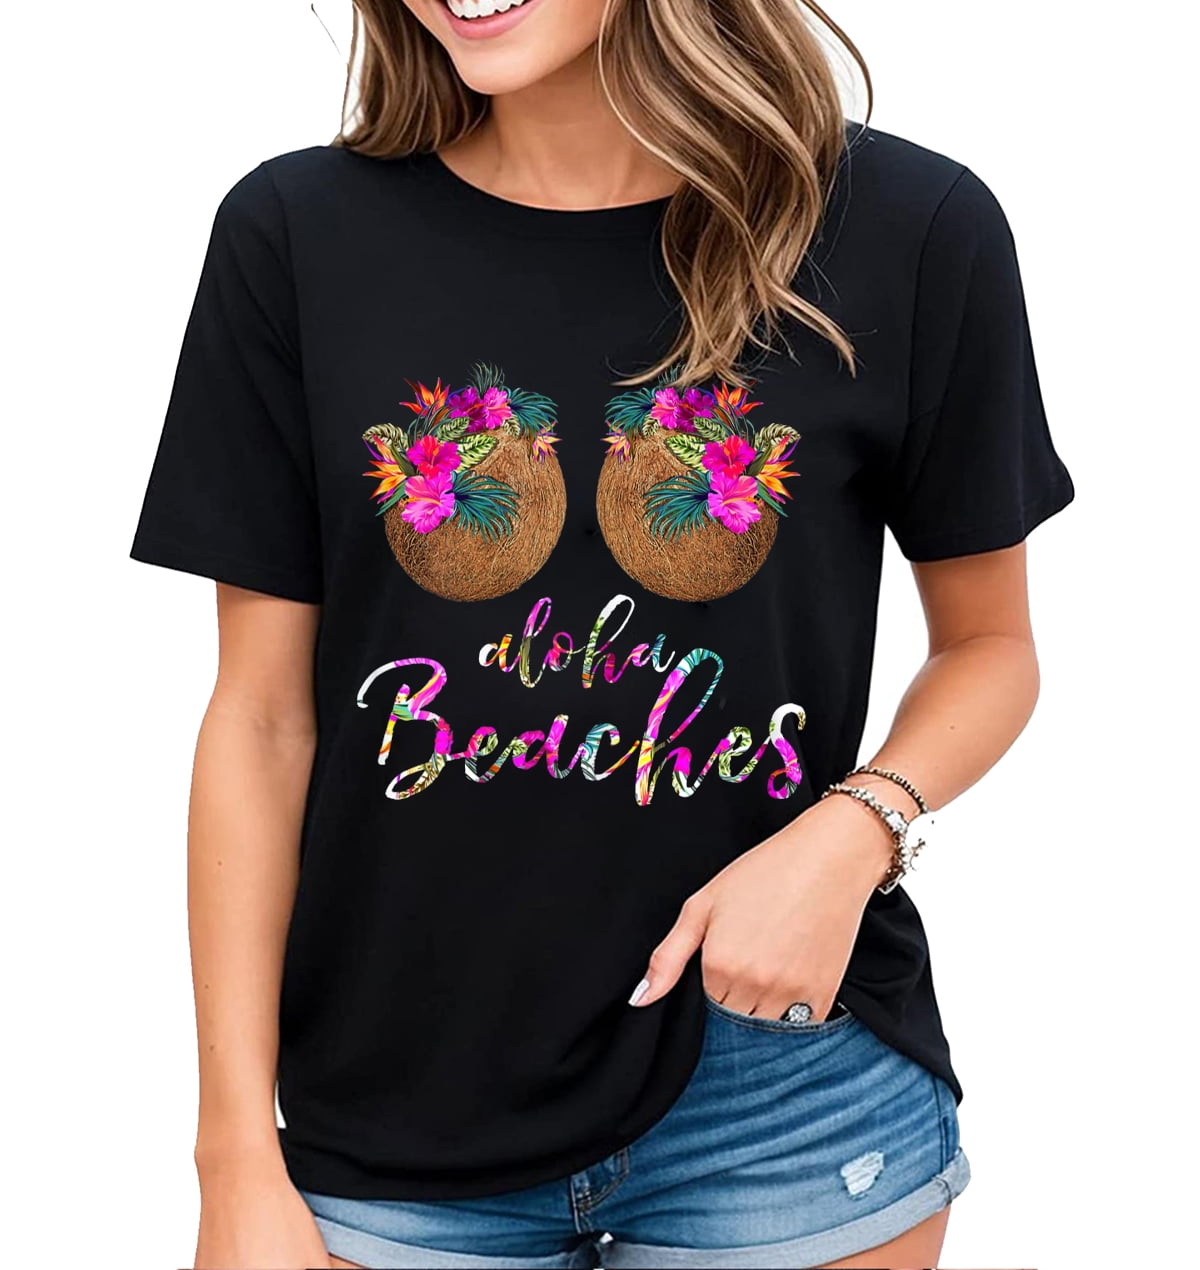 Womens Coconut Bra Graphic Flower Boobs Hawaii Aloha Beaches Funny T-shirt  Black 4X-Large 